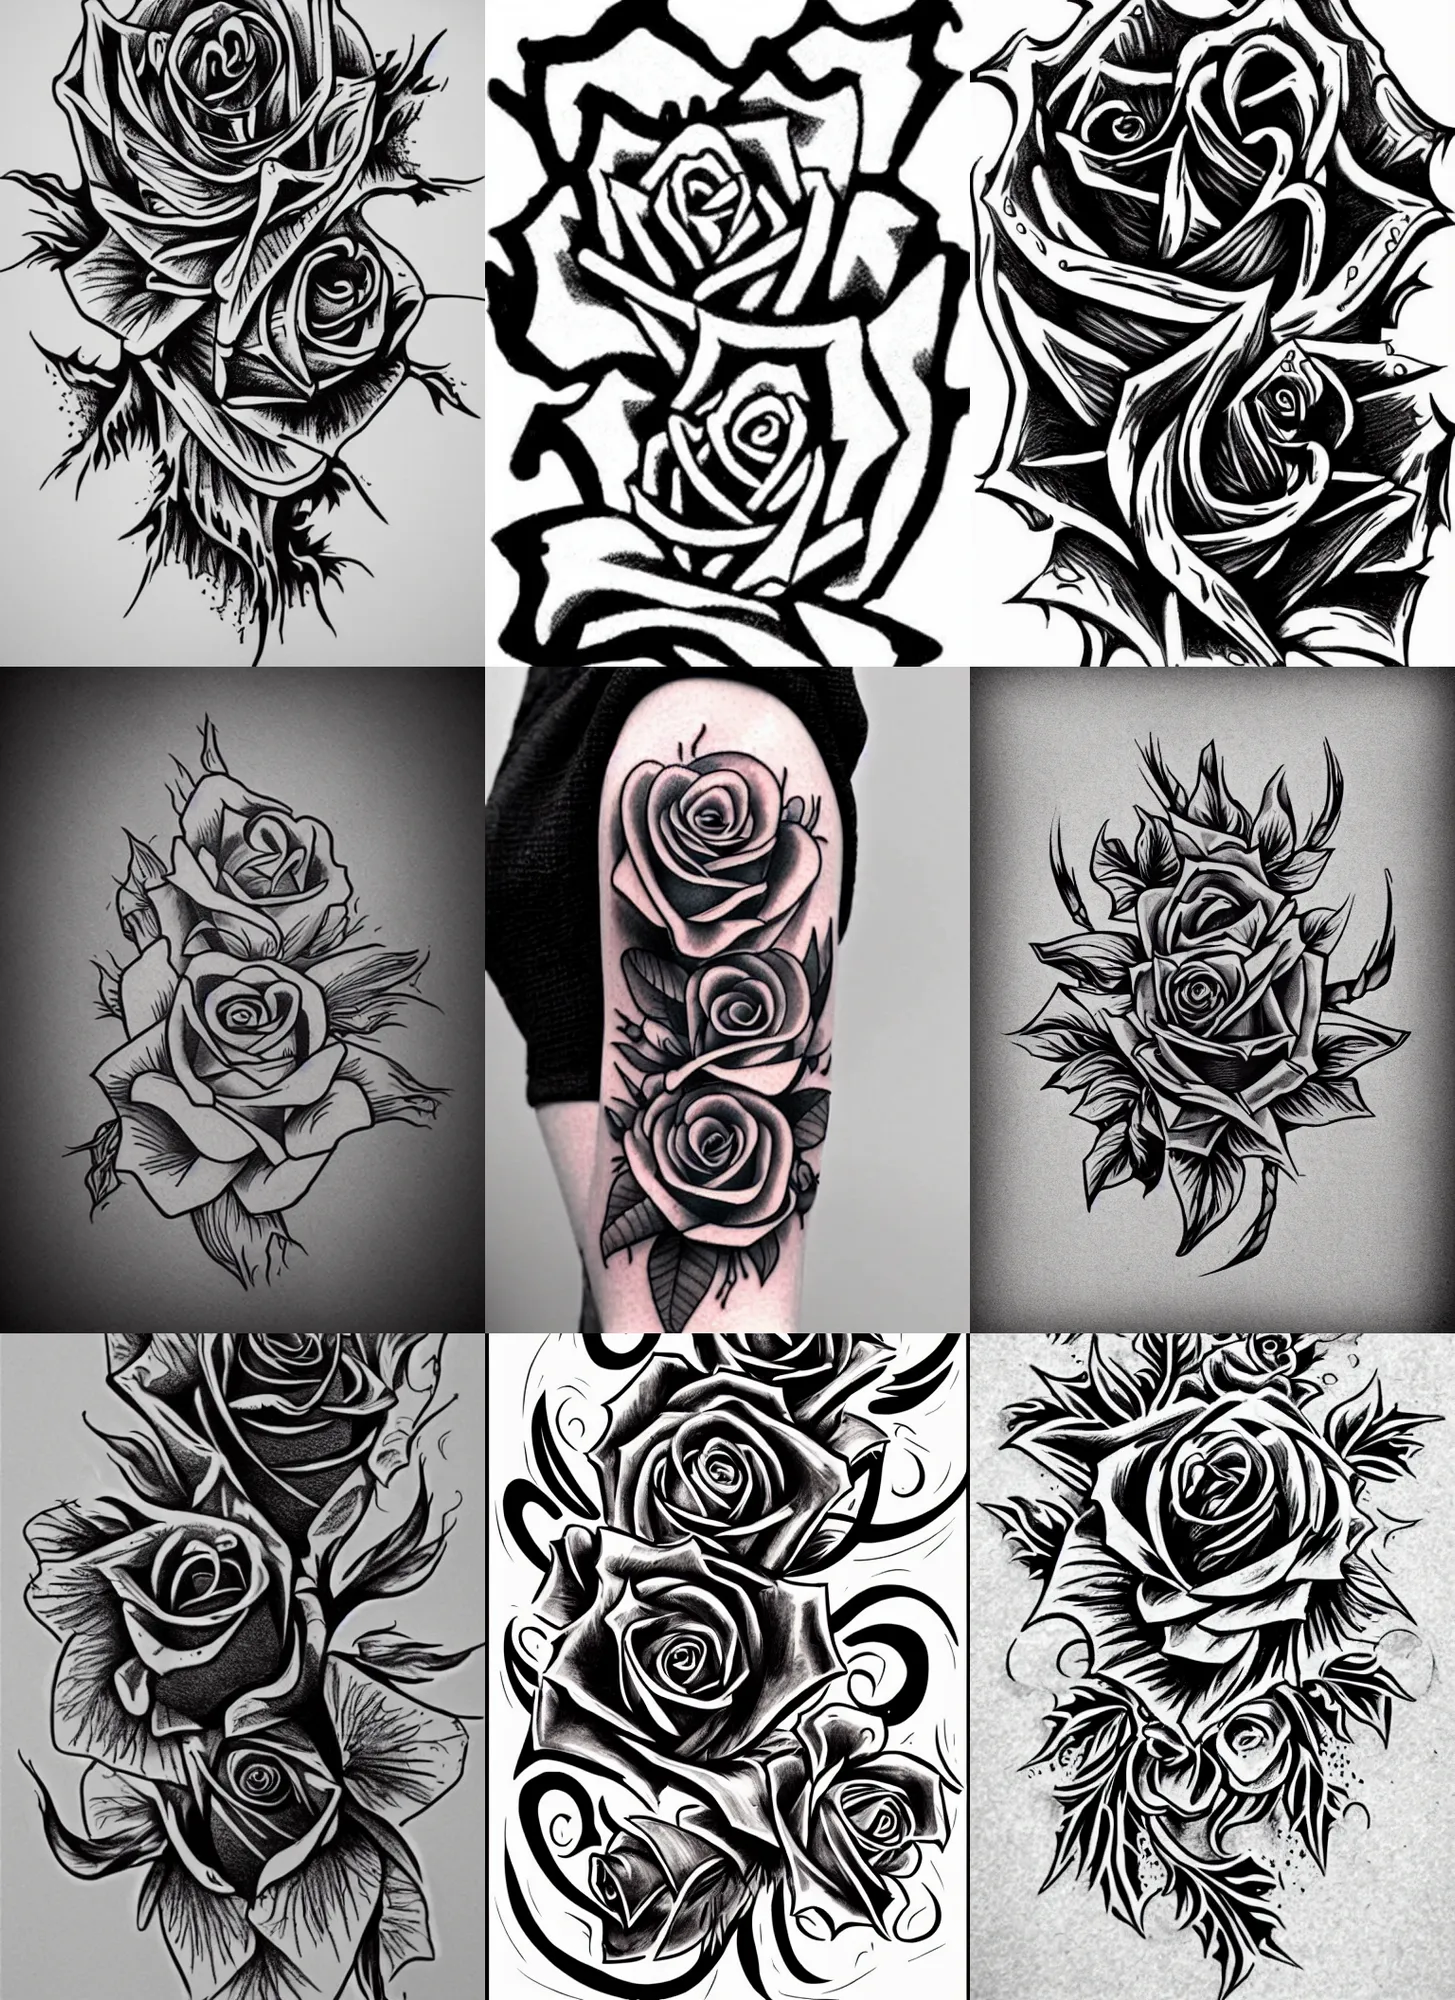 rose tattoo designs ideas HD video | new rose tattoo designs full HD video  | tattoo designs - YouTube